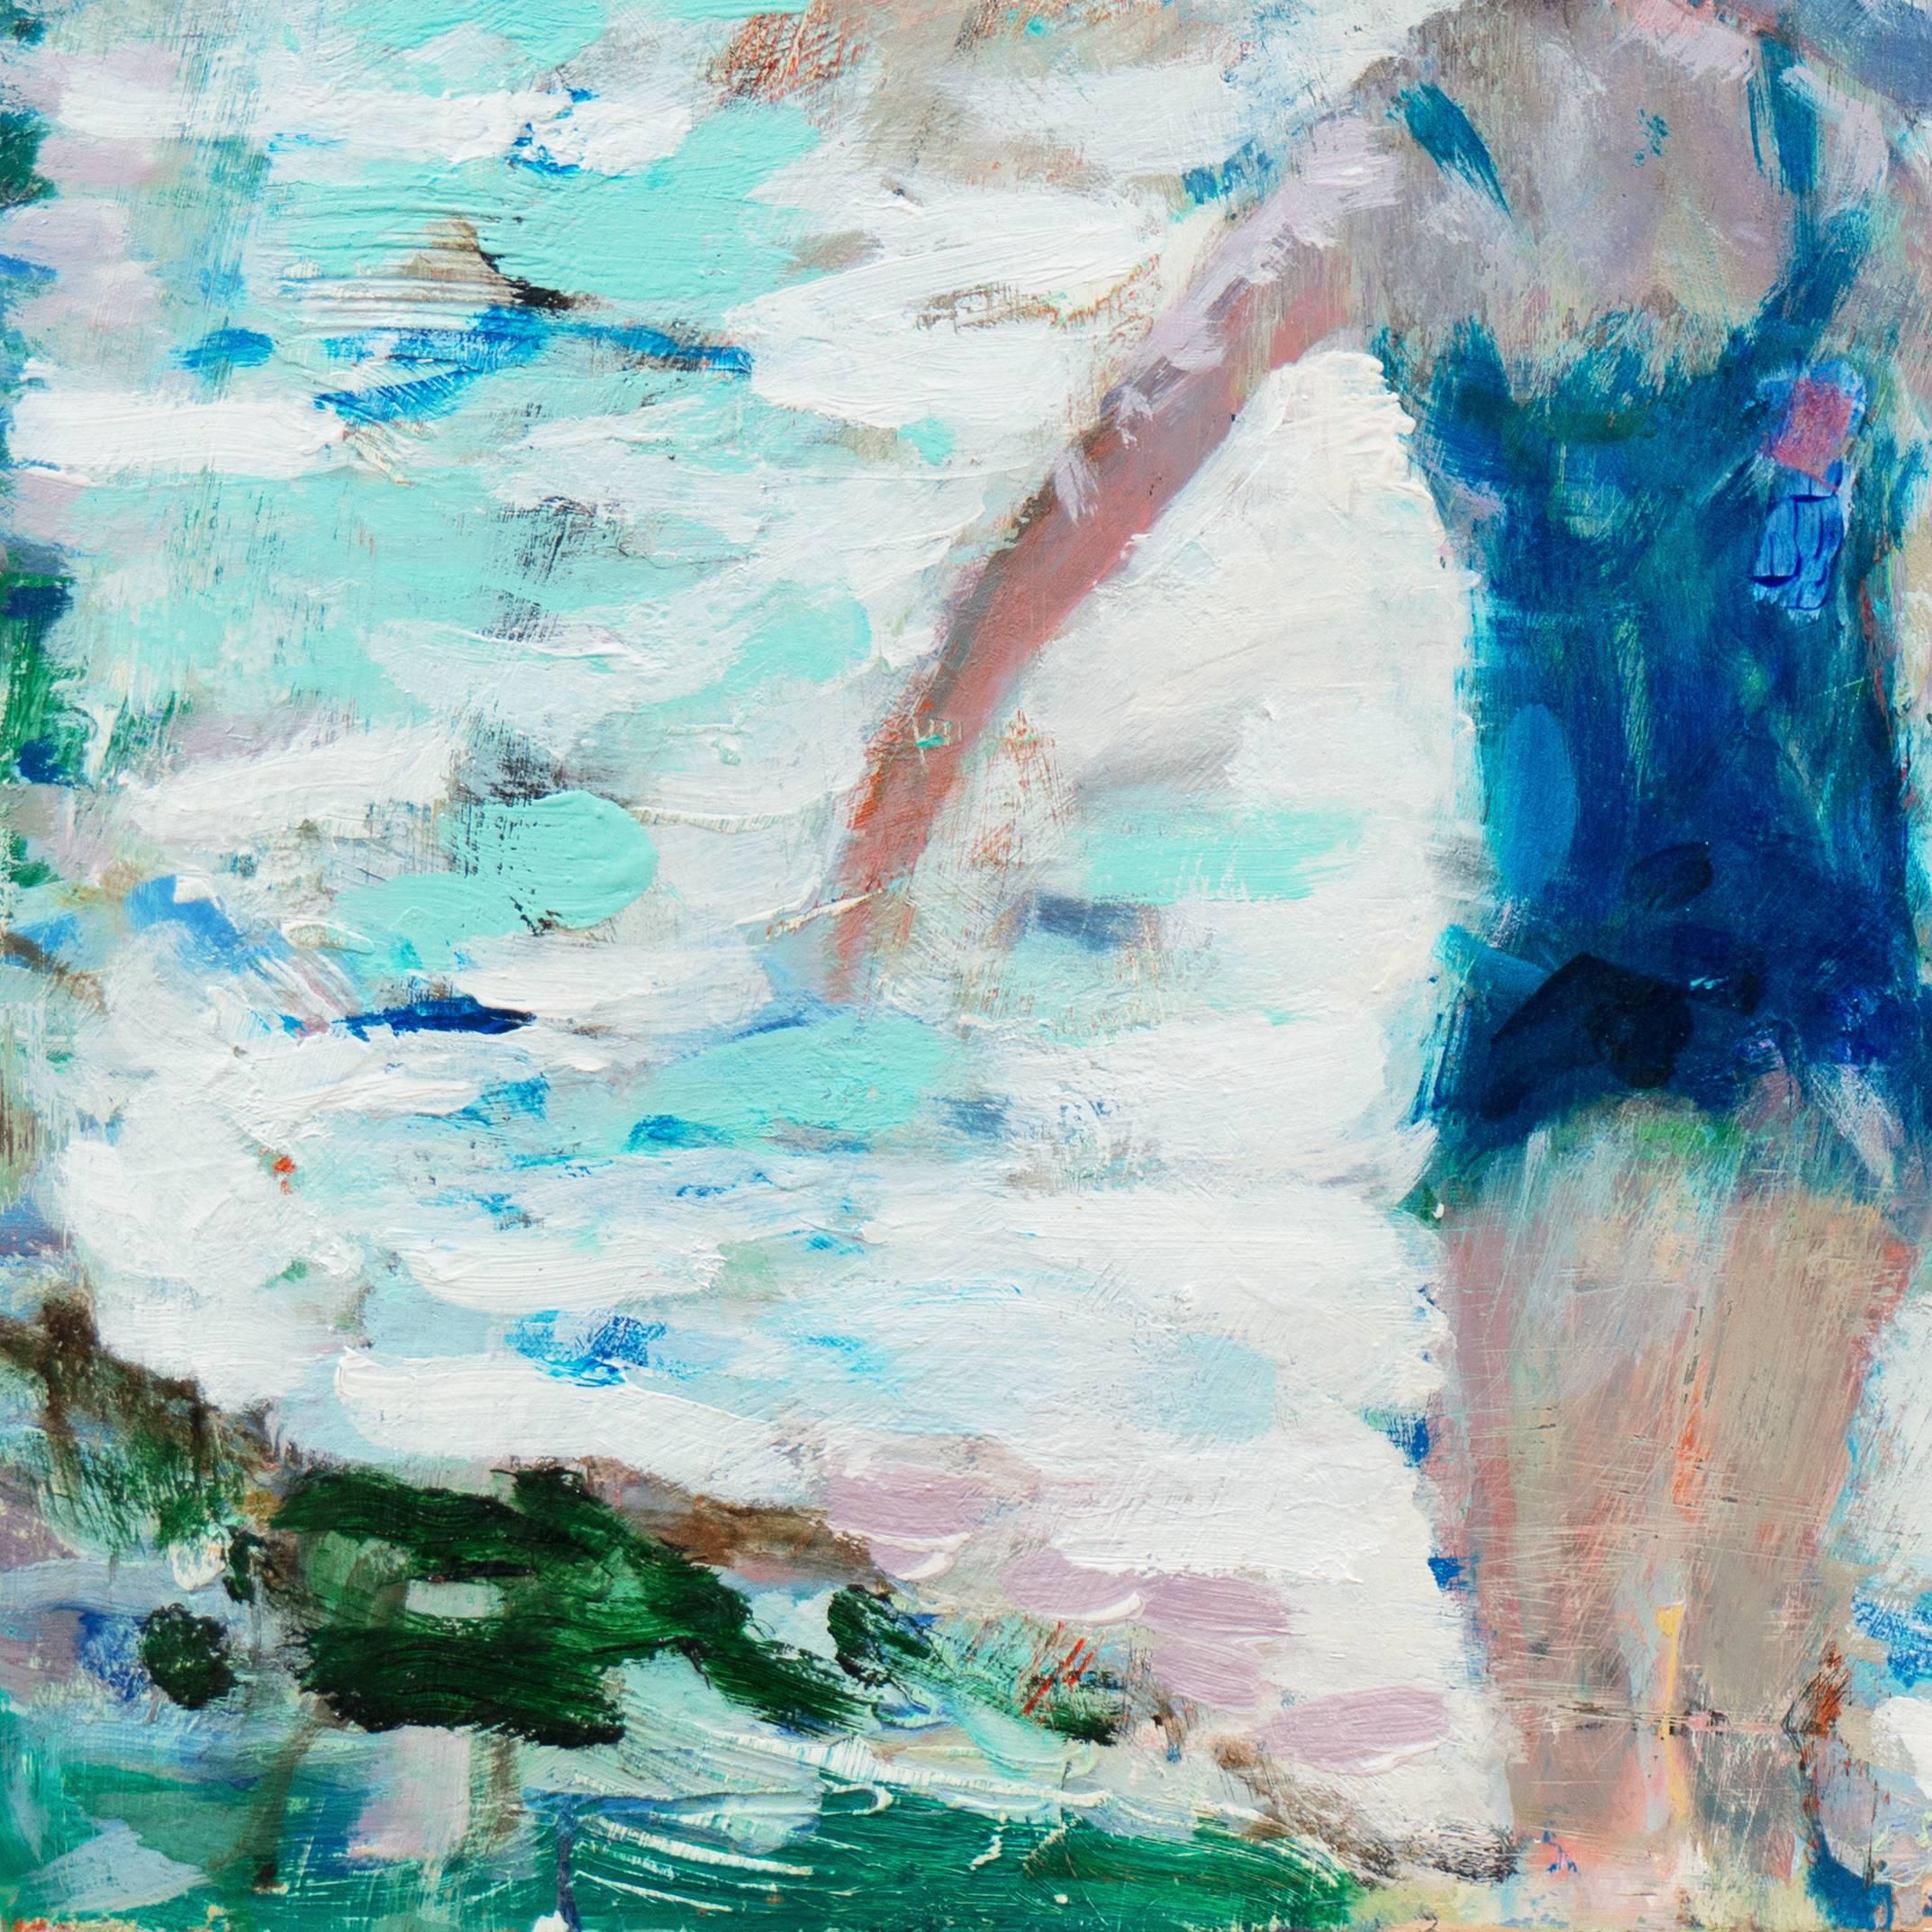 'Bathing at Carmel', California Post-Impressionist, Stanford, Big Sur, Monterey For Sale 2